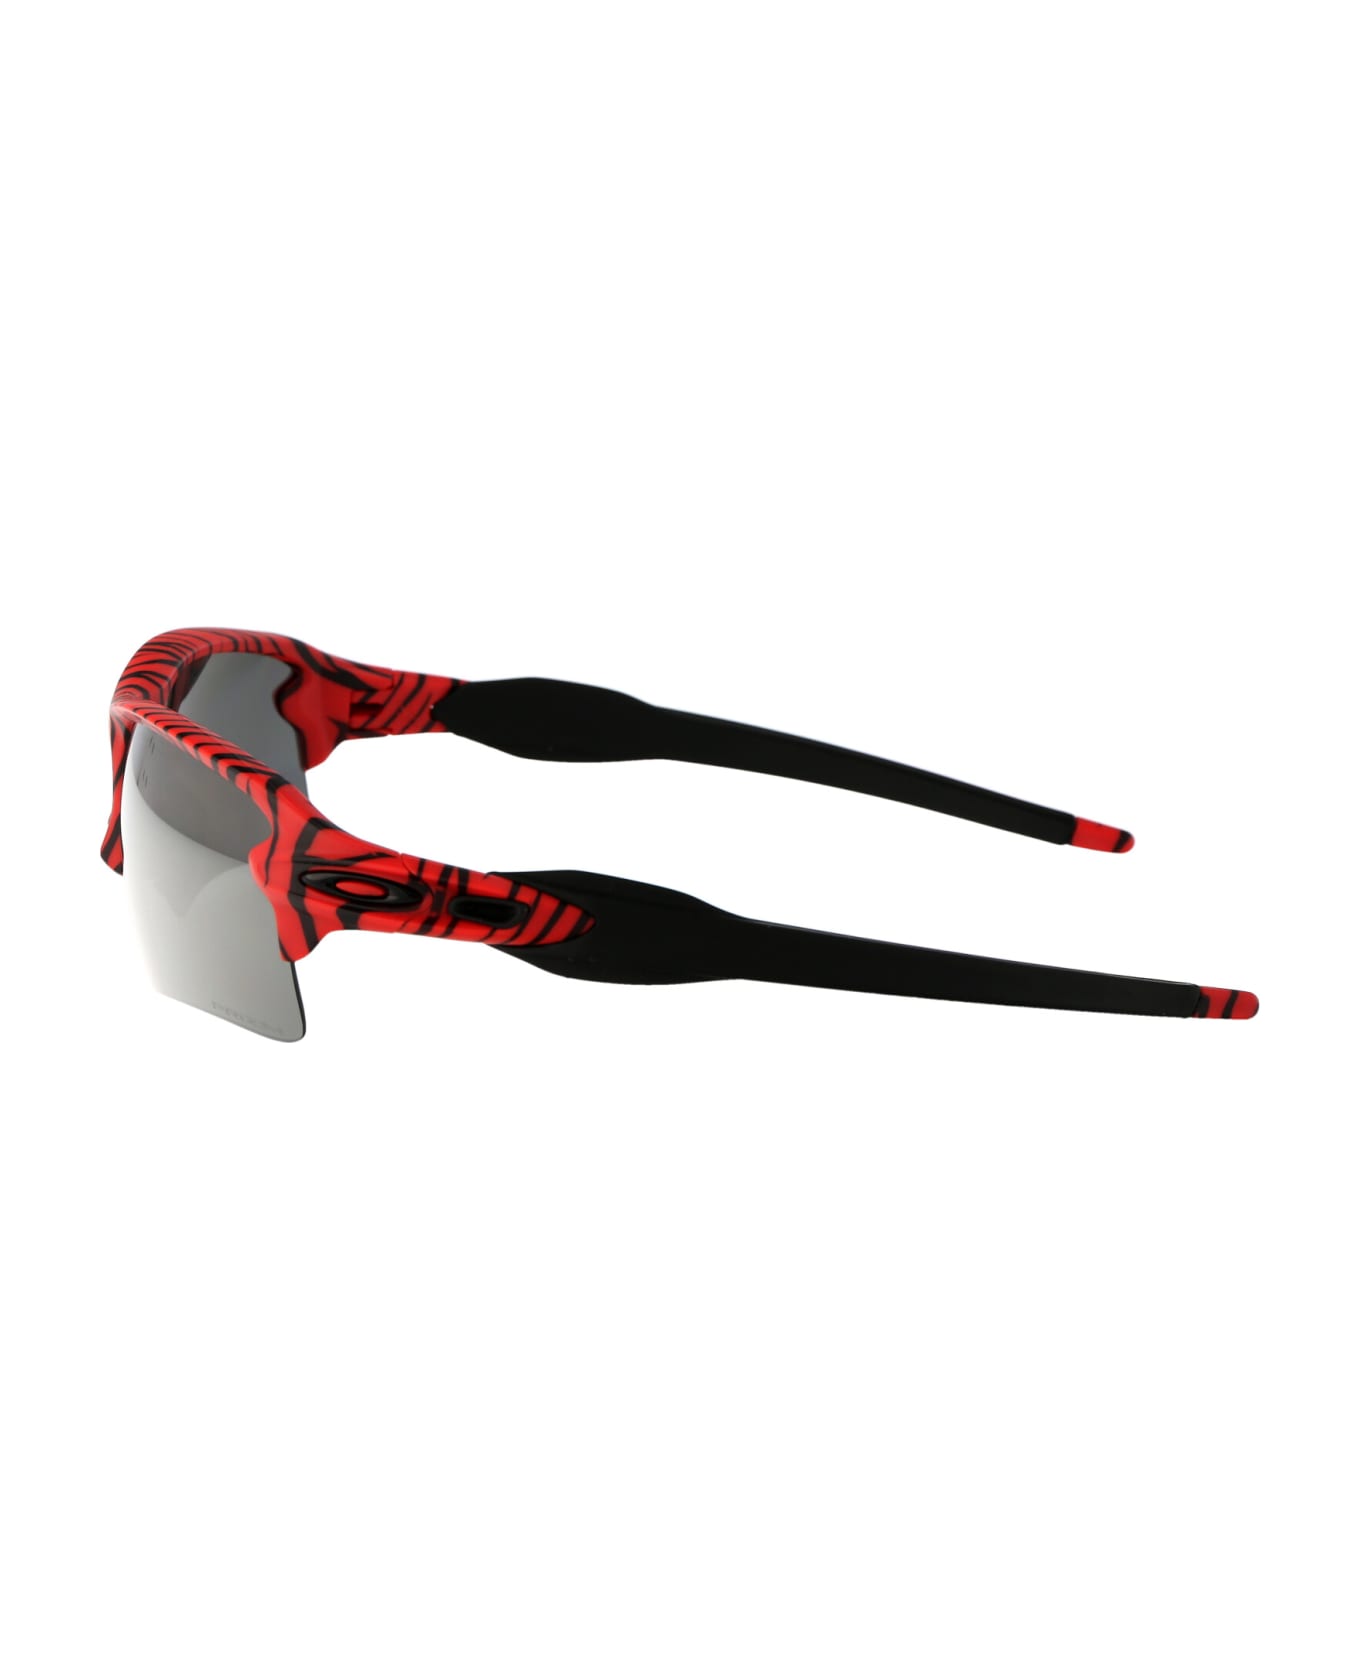 Oakley Flak 2.0 Xl Sunglasses - Red